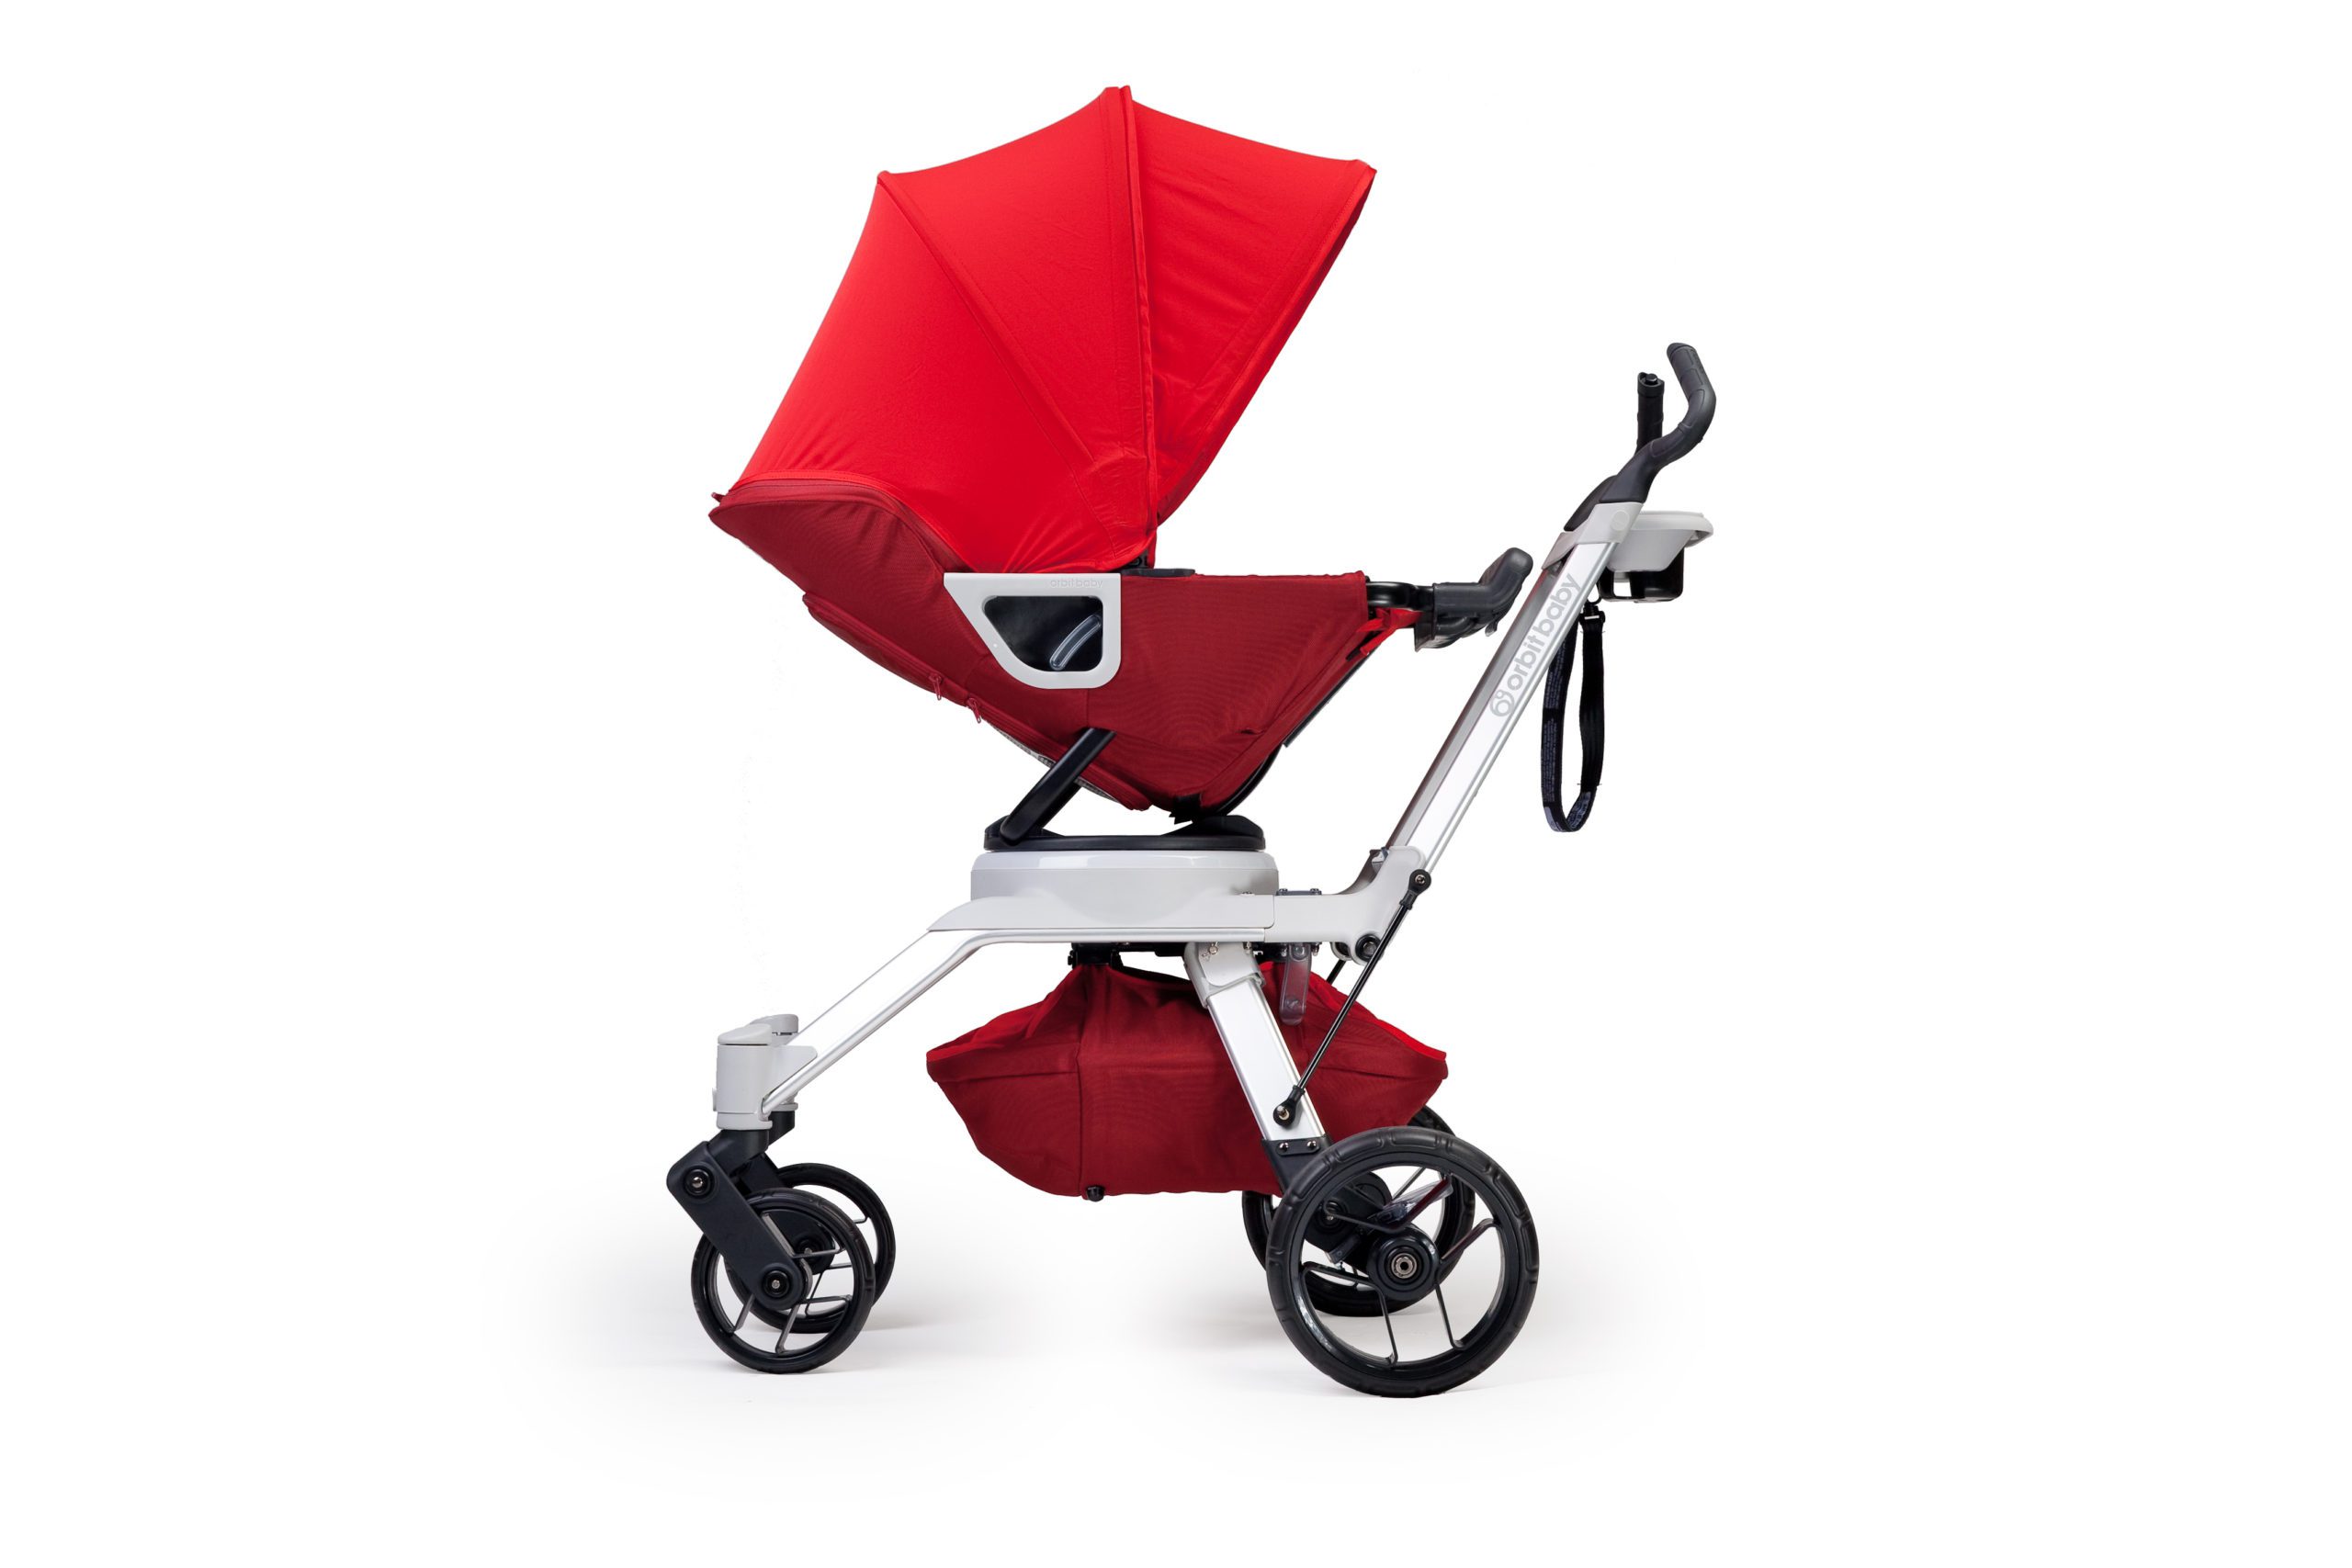 Orbit Baby Stroller G2